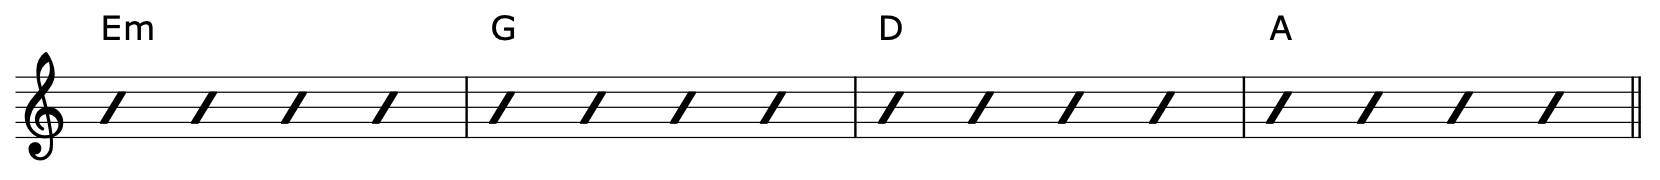 Dorian-Progression-Song-Example-1-1